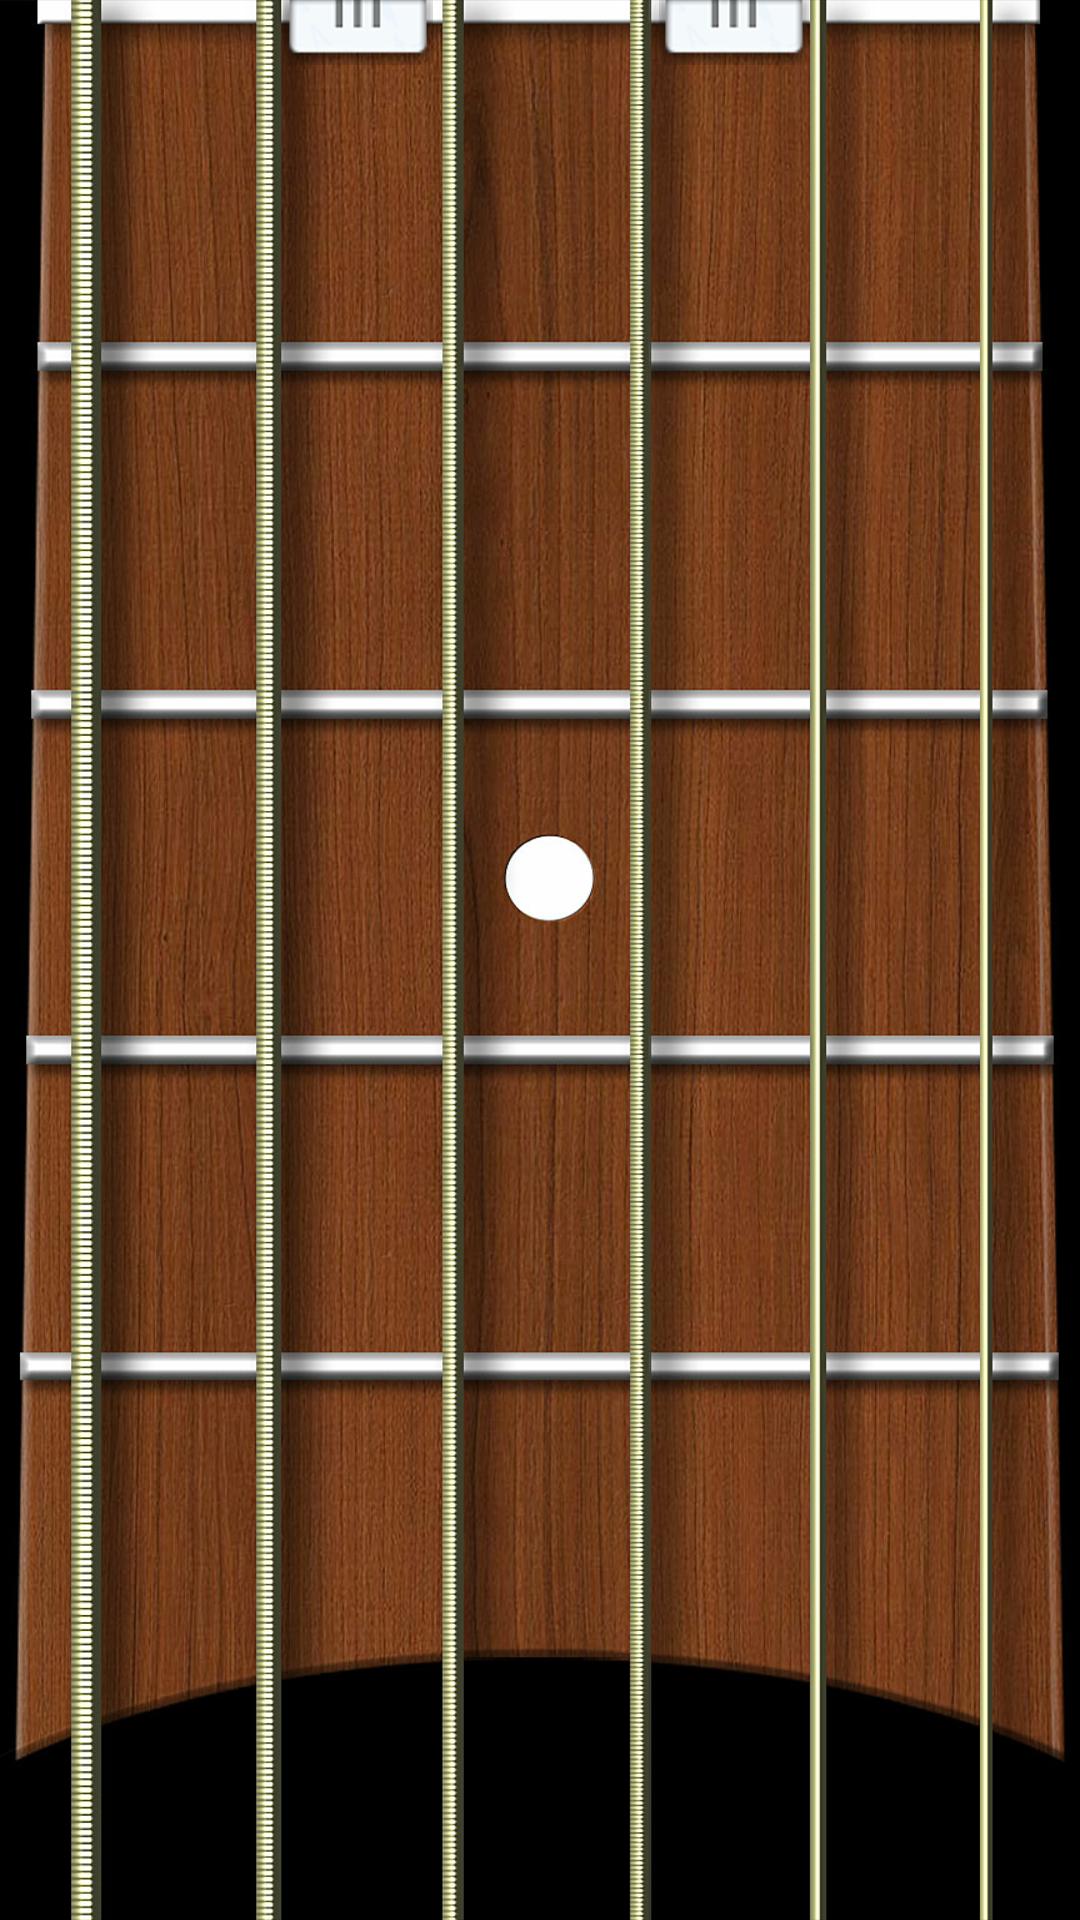 My Guitar Solo & Chords 2.4 Screenshot 17